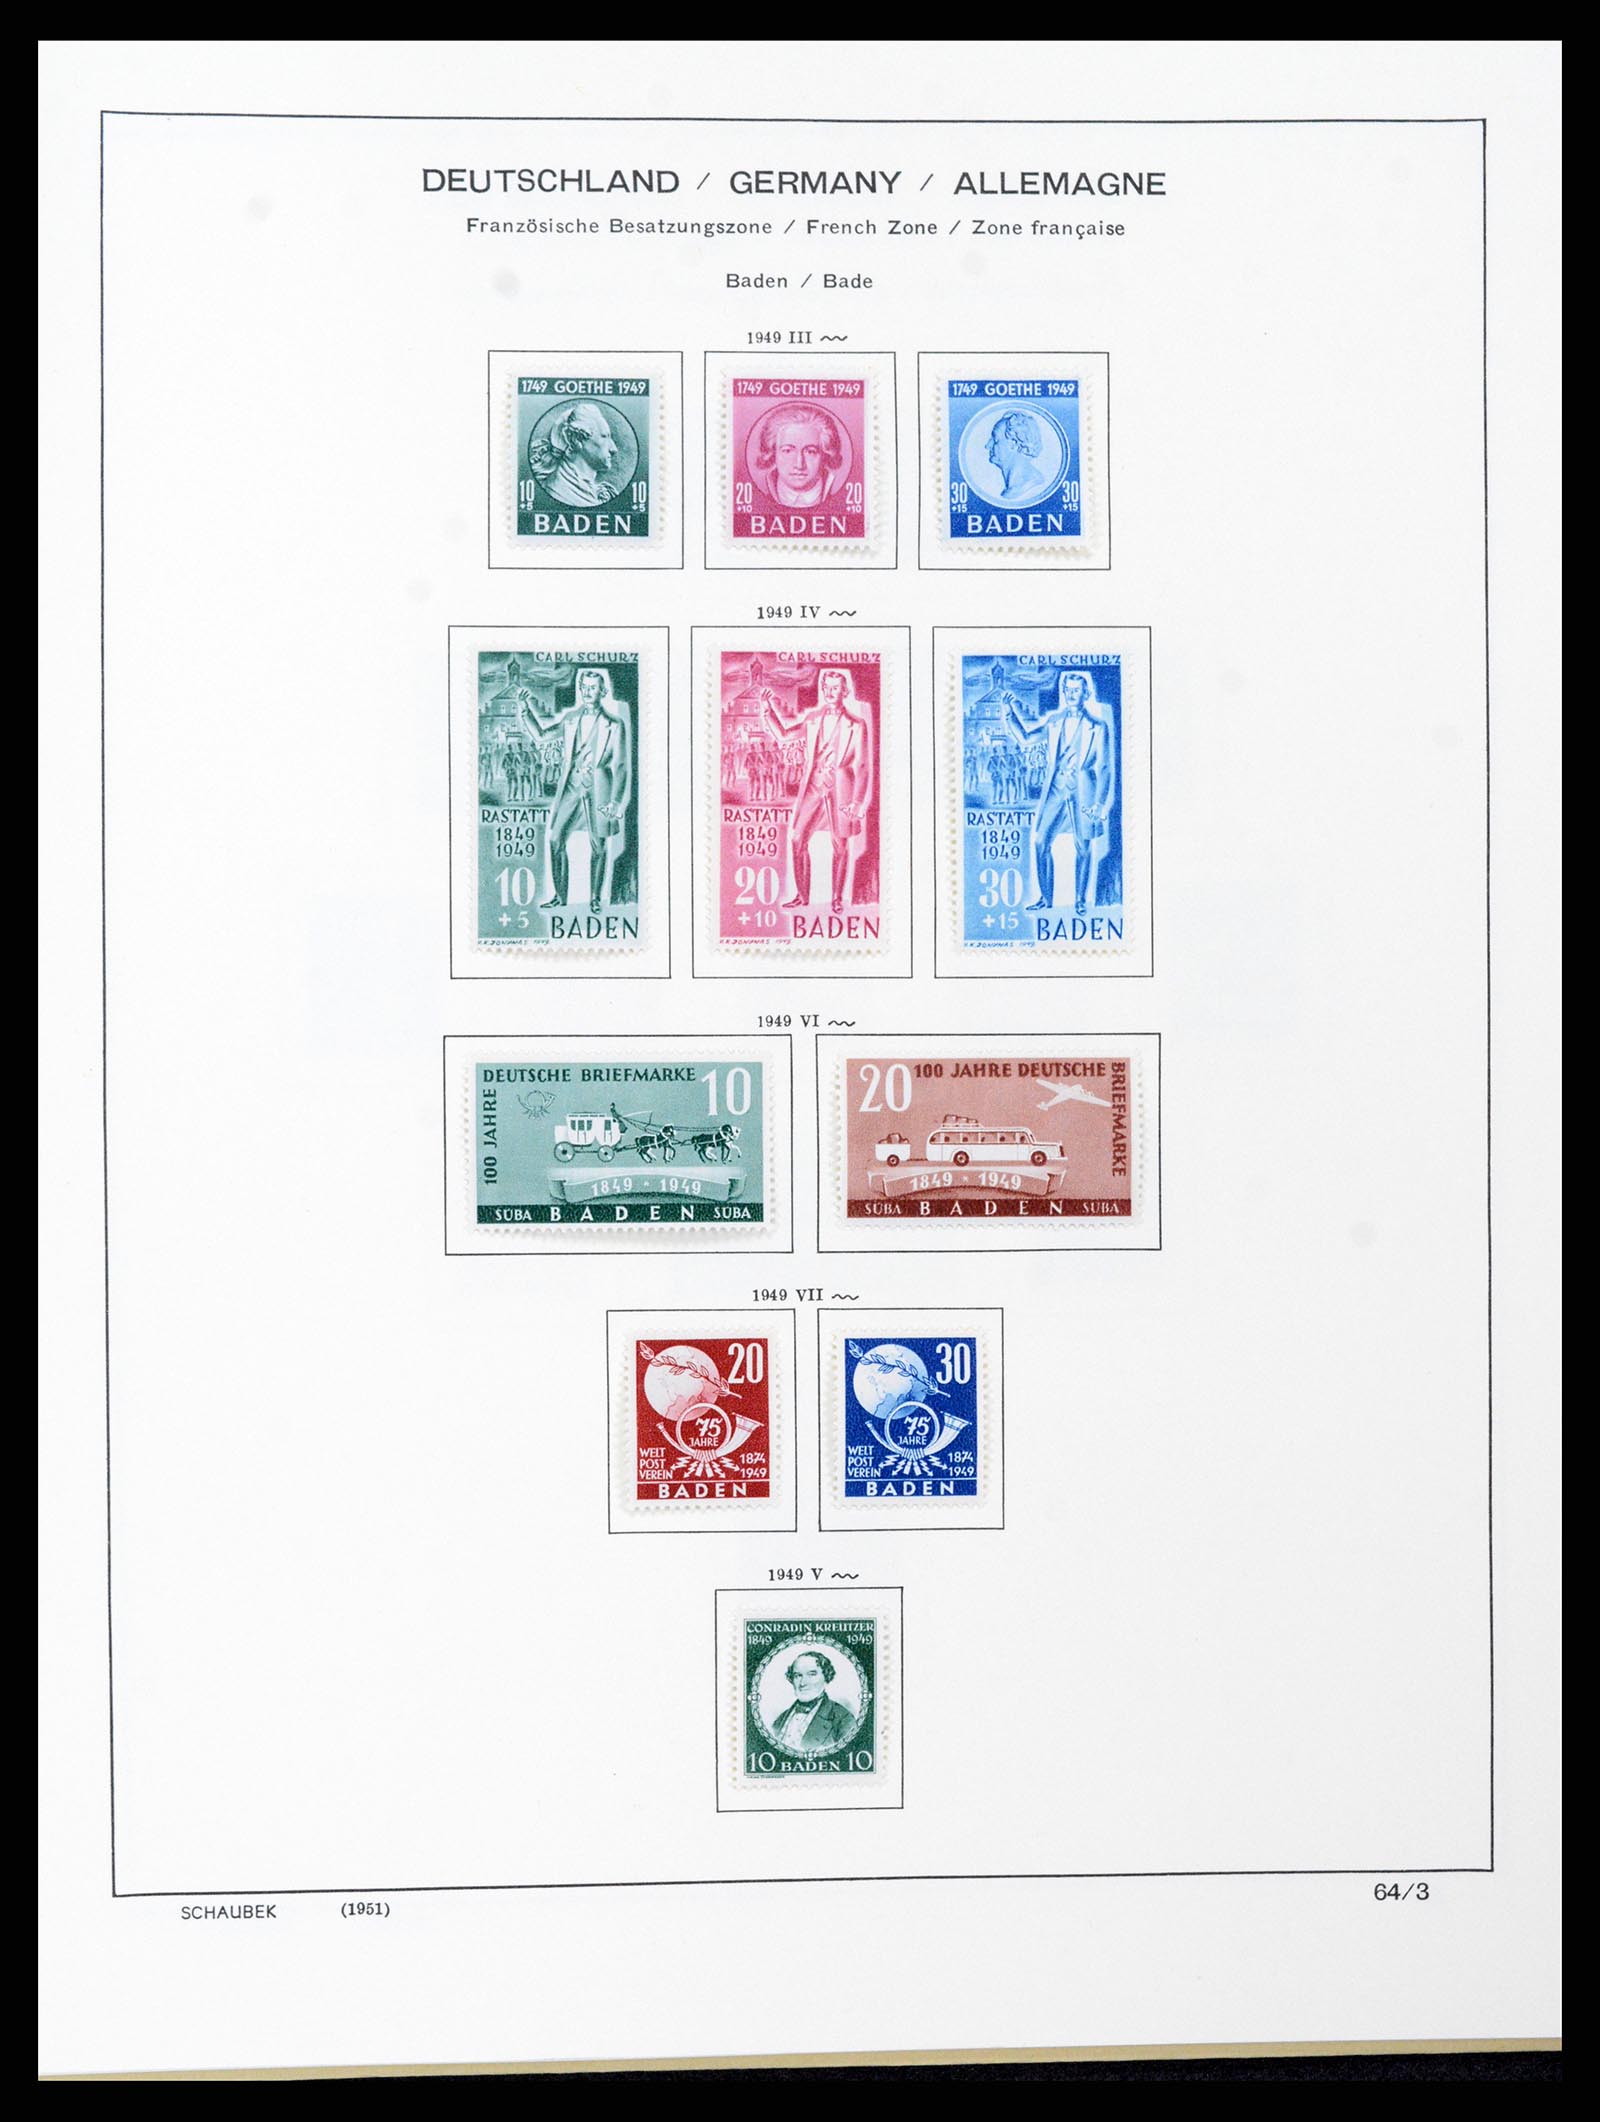 37645 063 - Stamp collection 37645 German Zones 1945-1949.